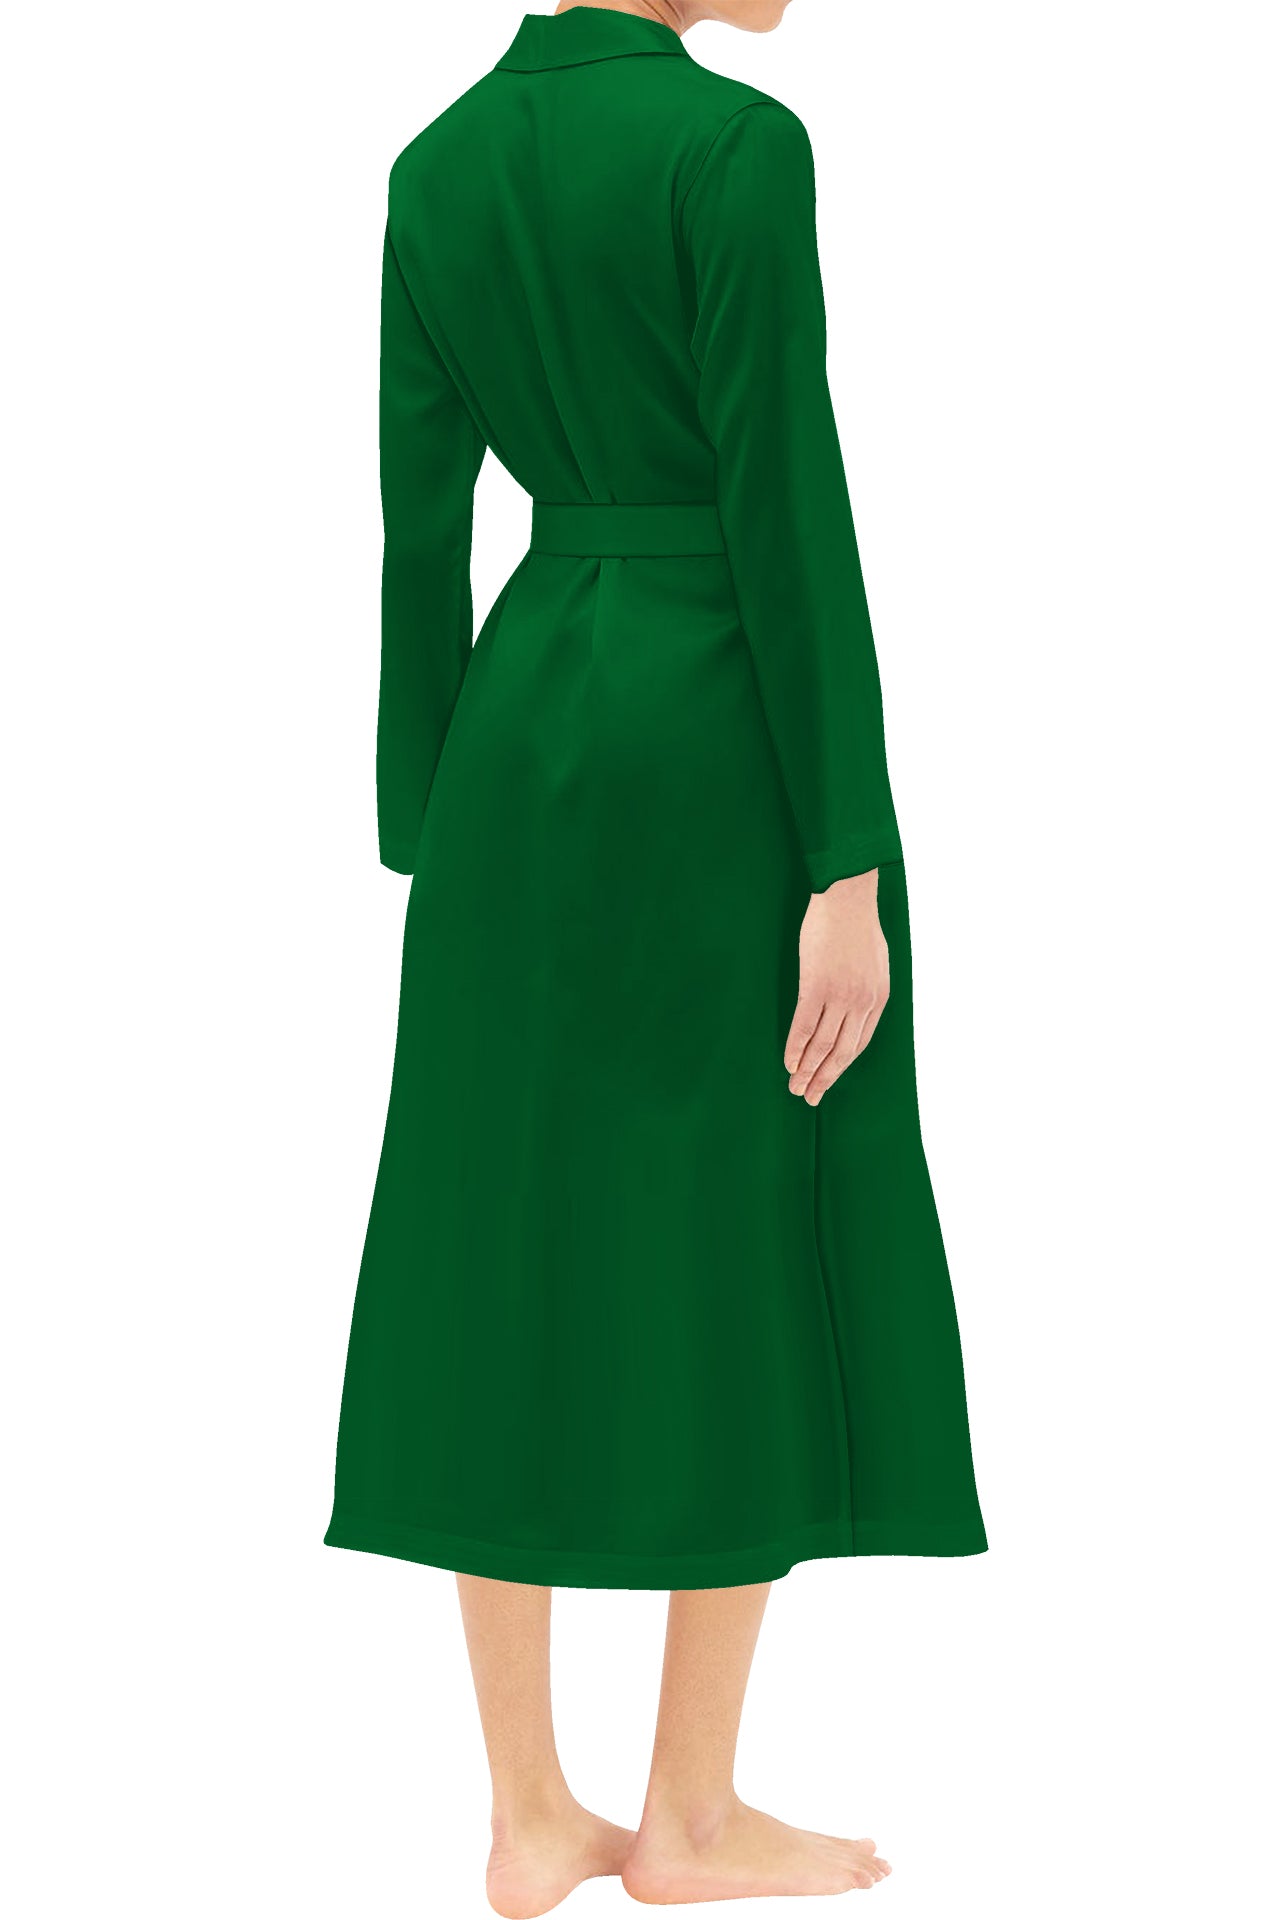 Green Midi Length Wrap Dress Made with Vegan Silk